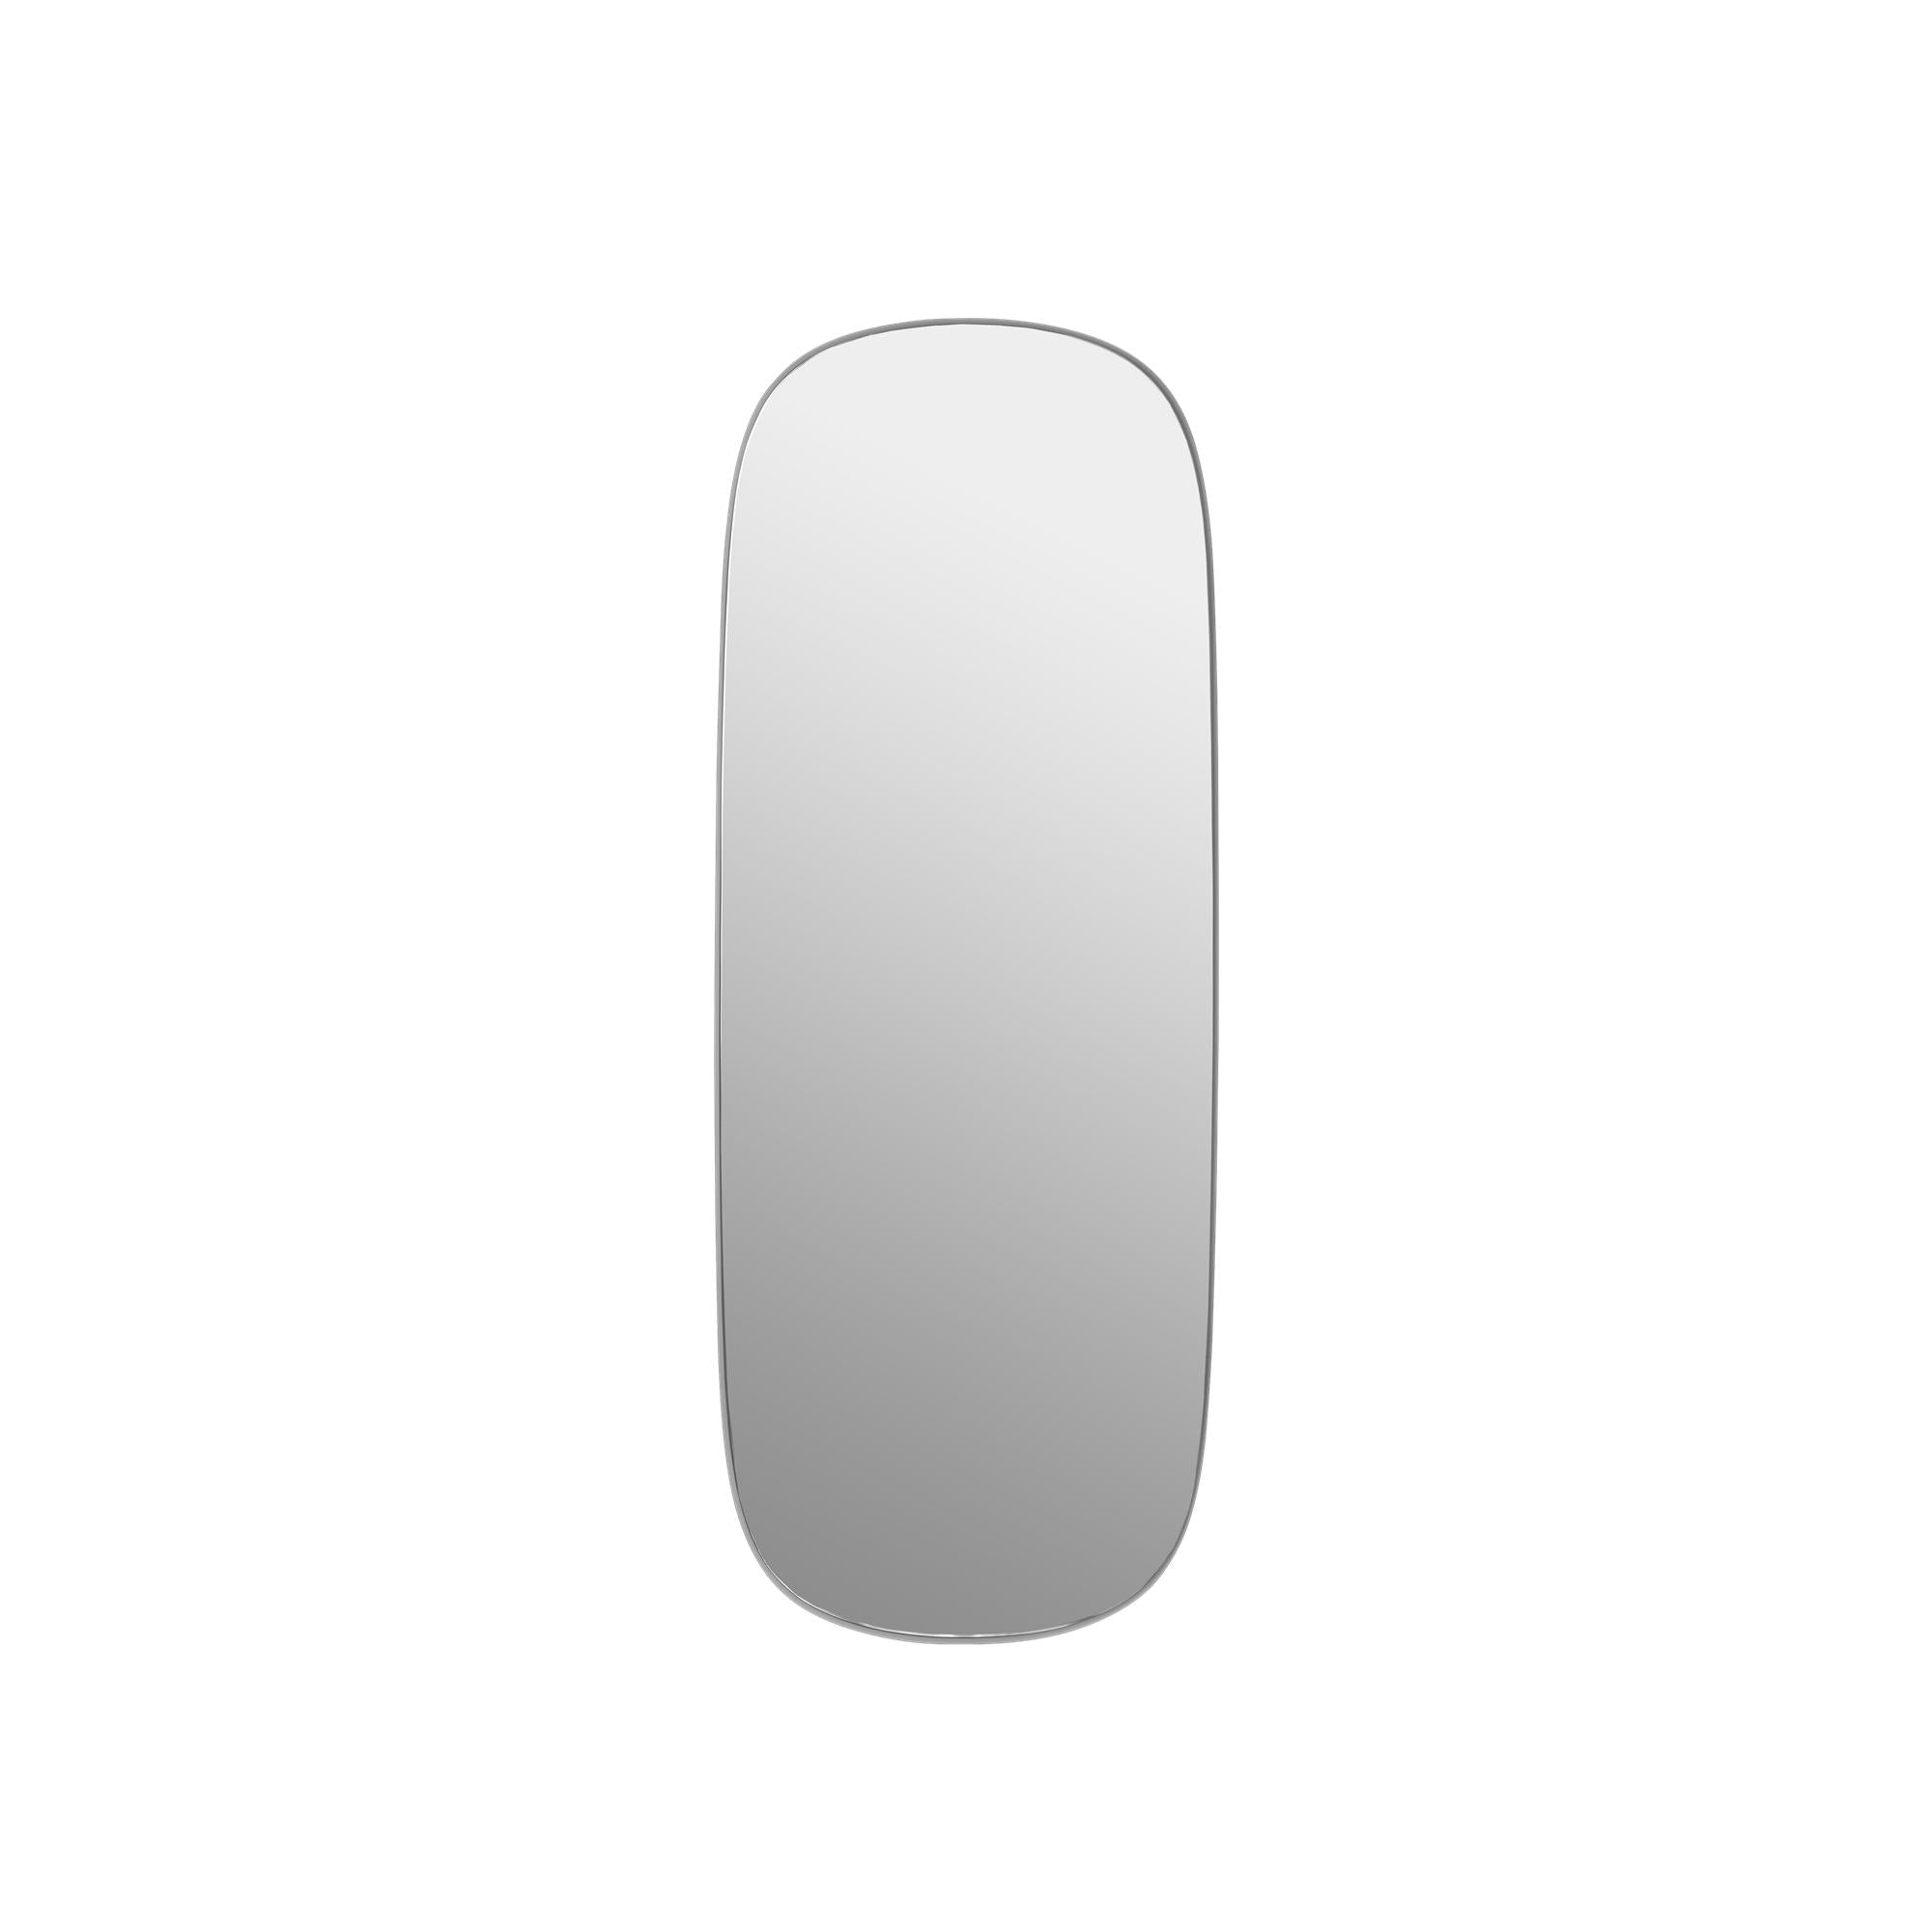 Muuto emoldurado espelho grande, cinza (claro)